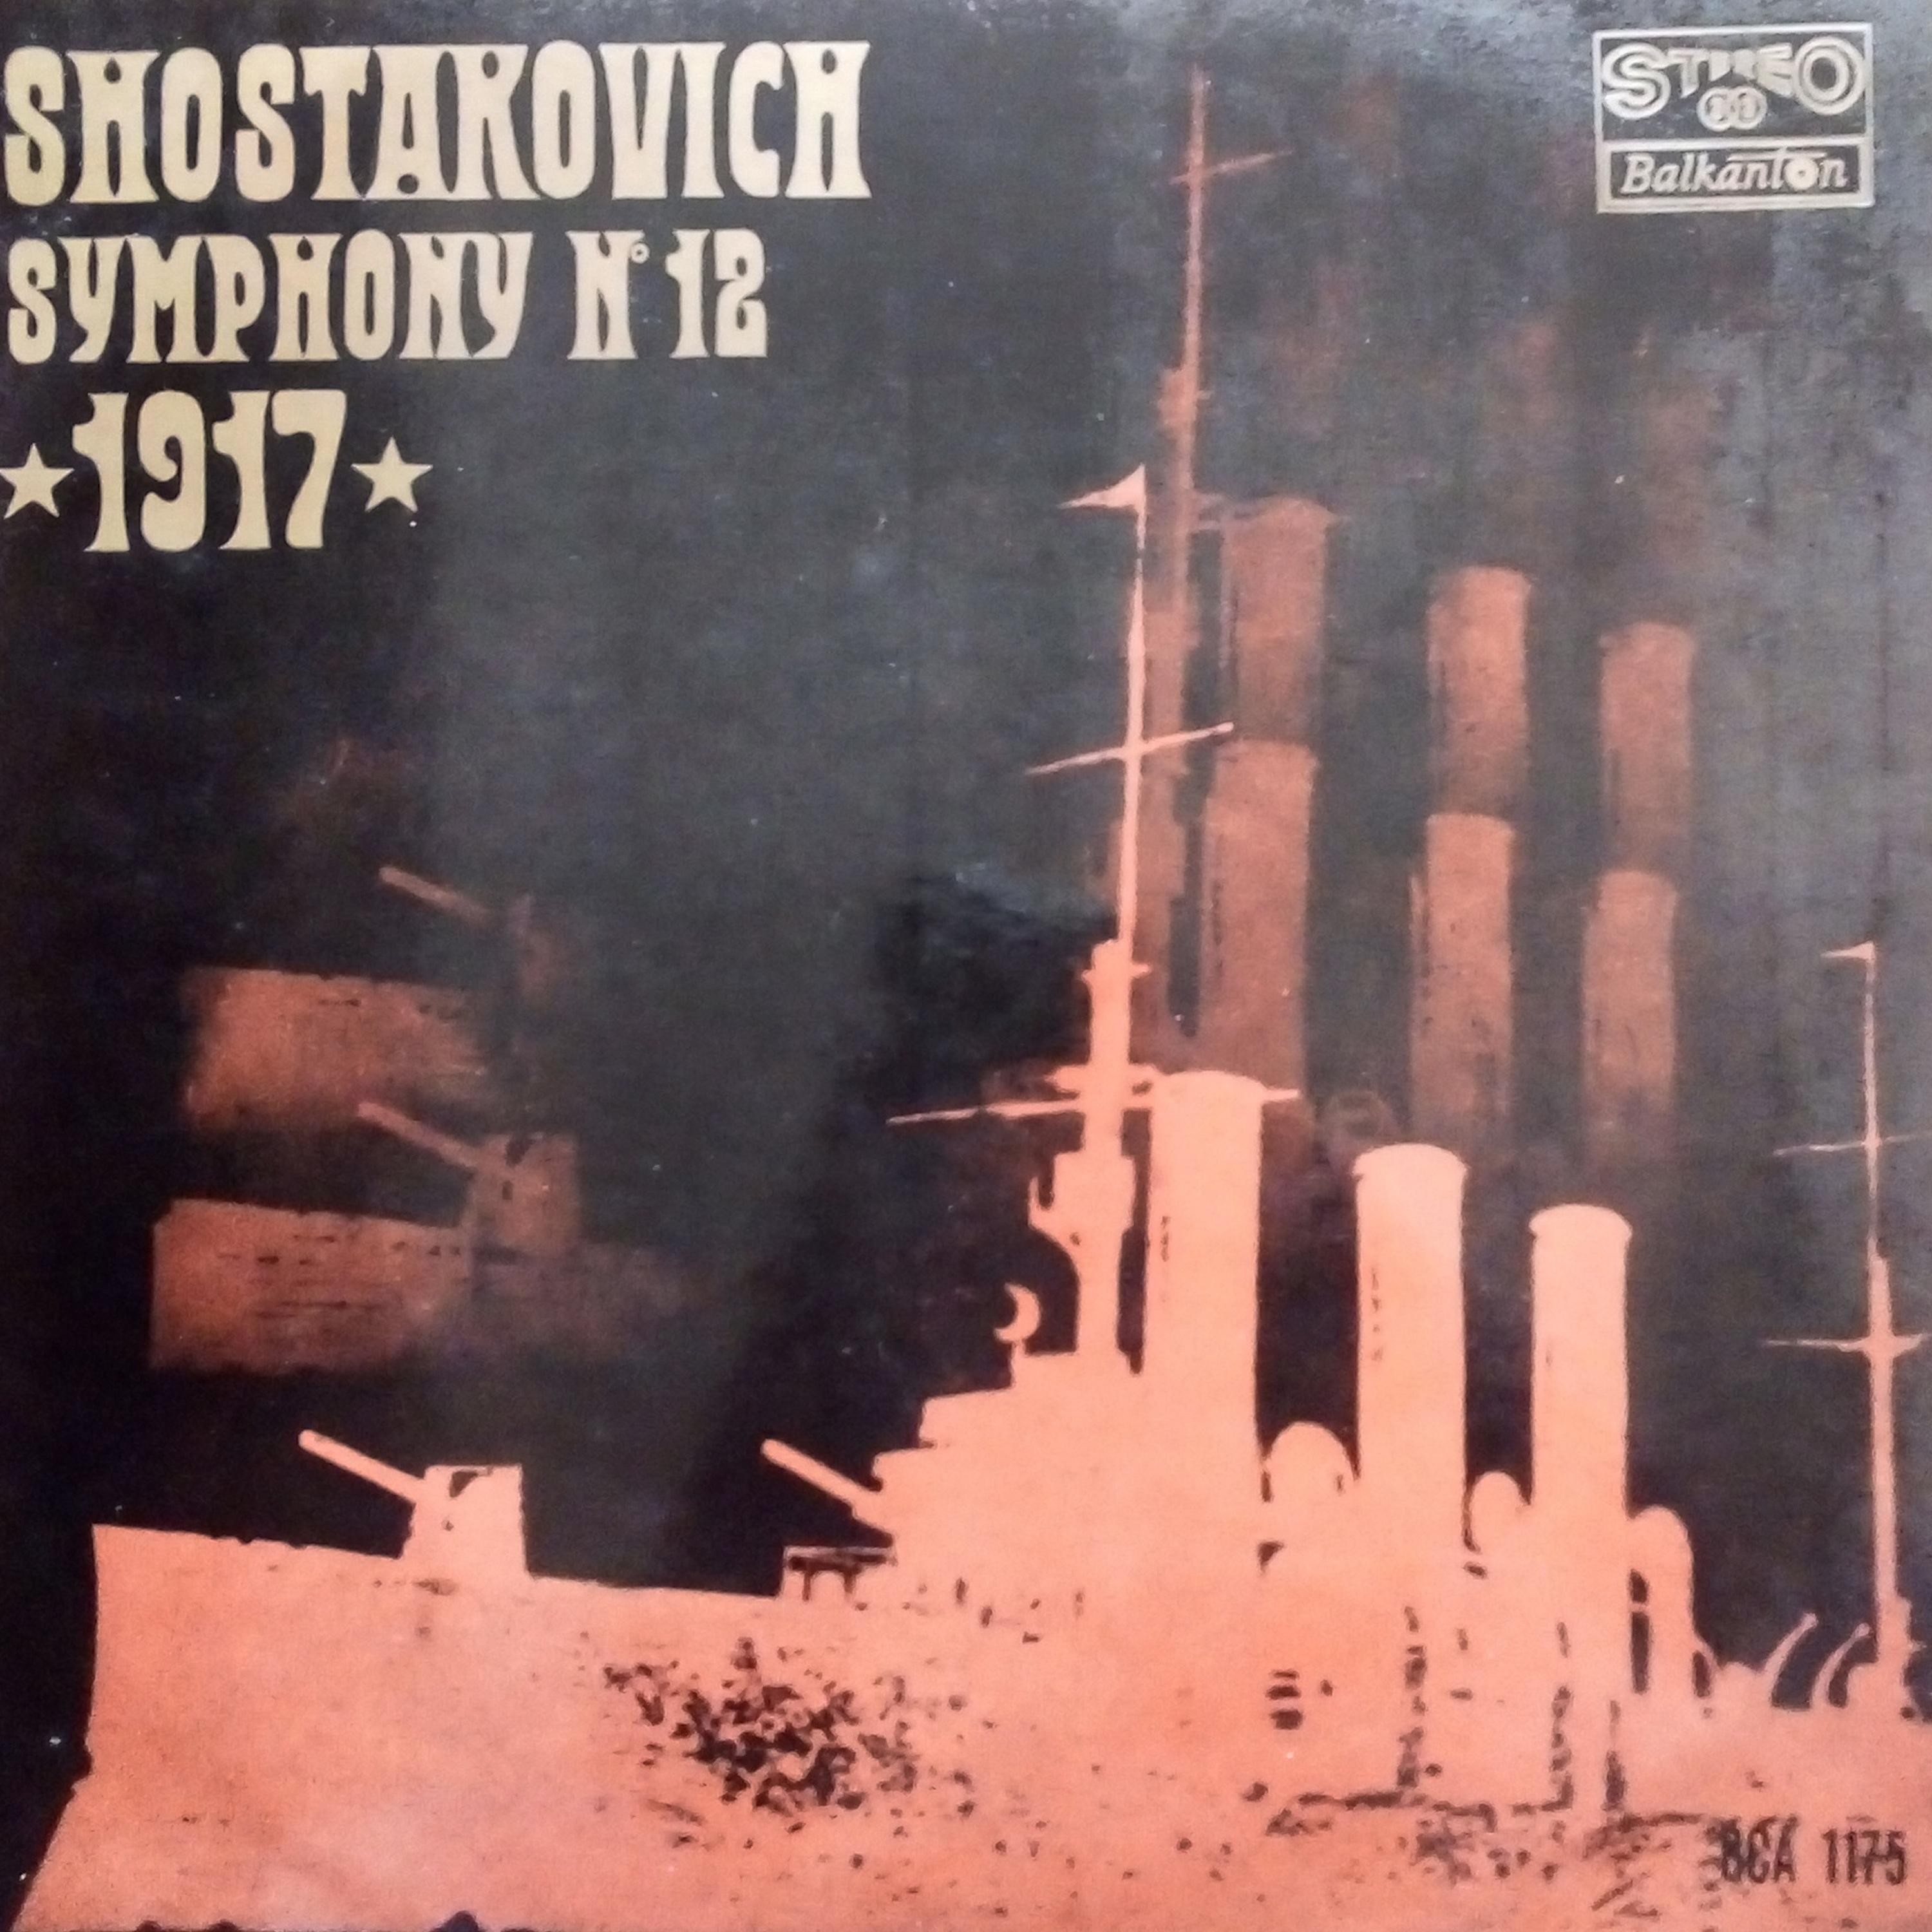 Bulgarian National Radio Symphony Orchestra - Symphony No. 12 in D Minor, Op. 112 The Year 1917: II. Razliv. Allegro - L'istesso tempo - Adagio